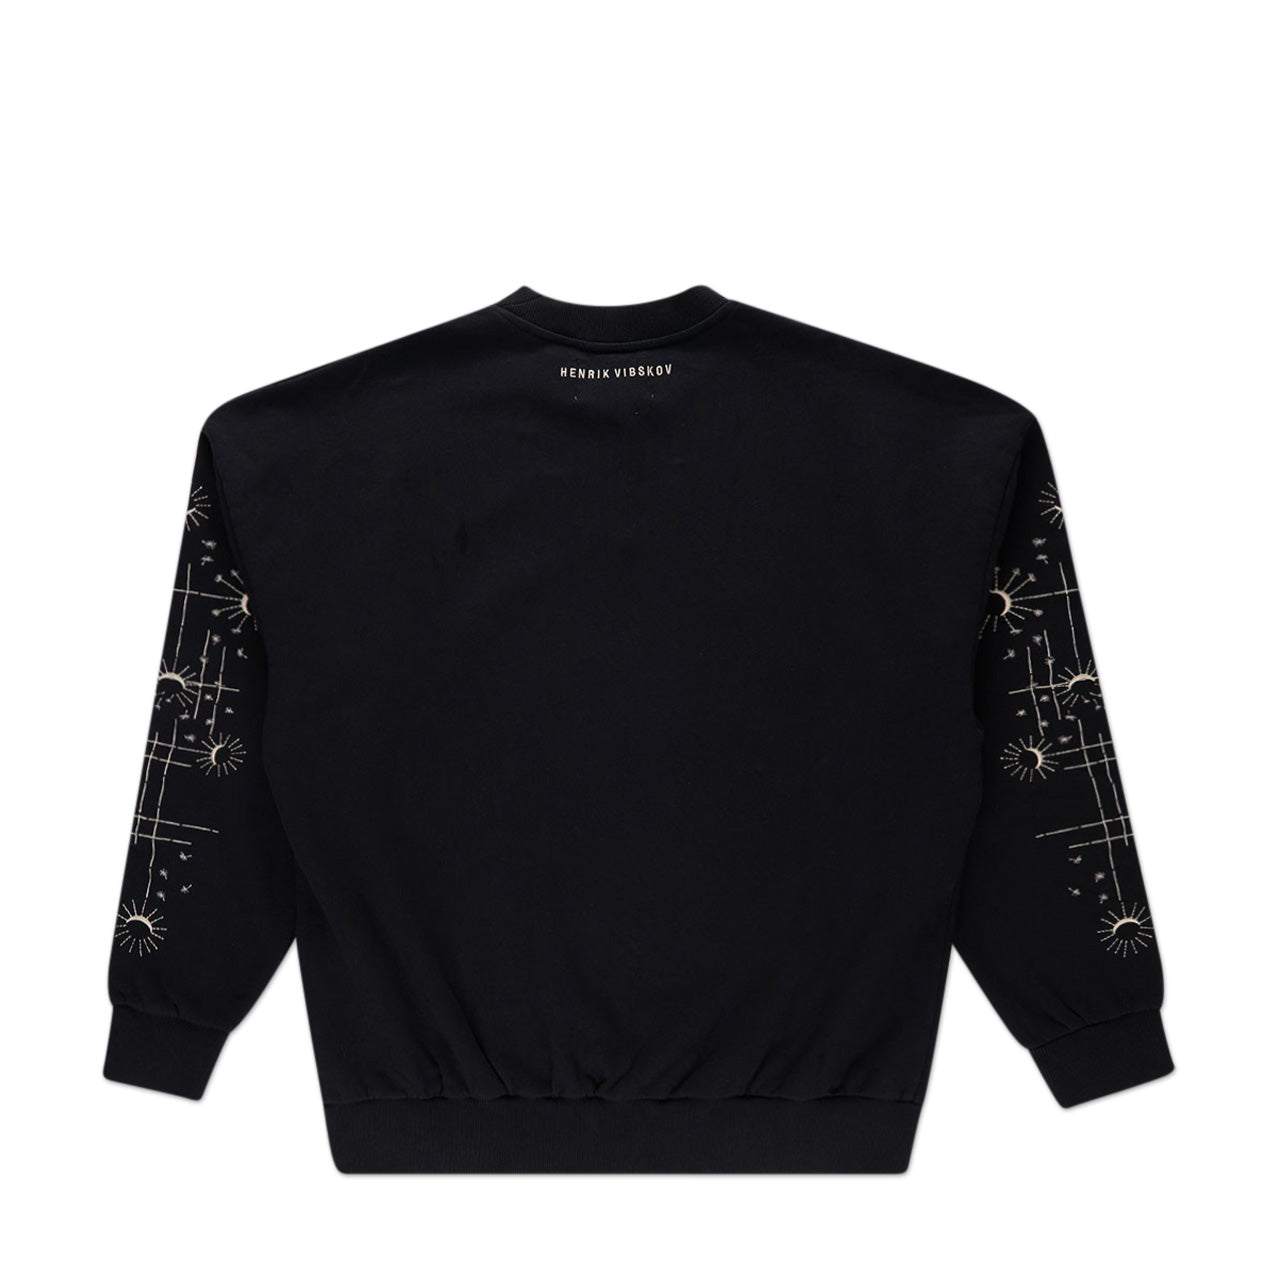 henrik vibskov sun moon sweater (black)